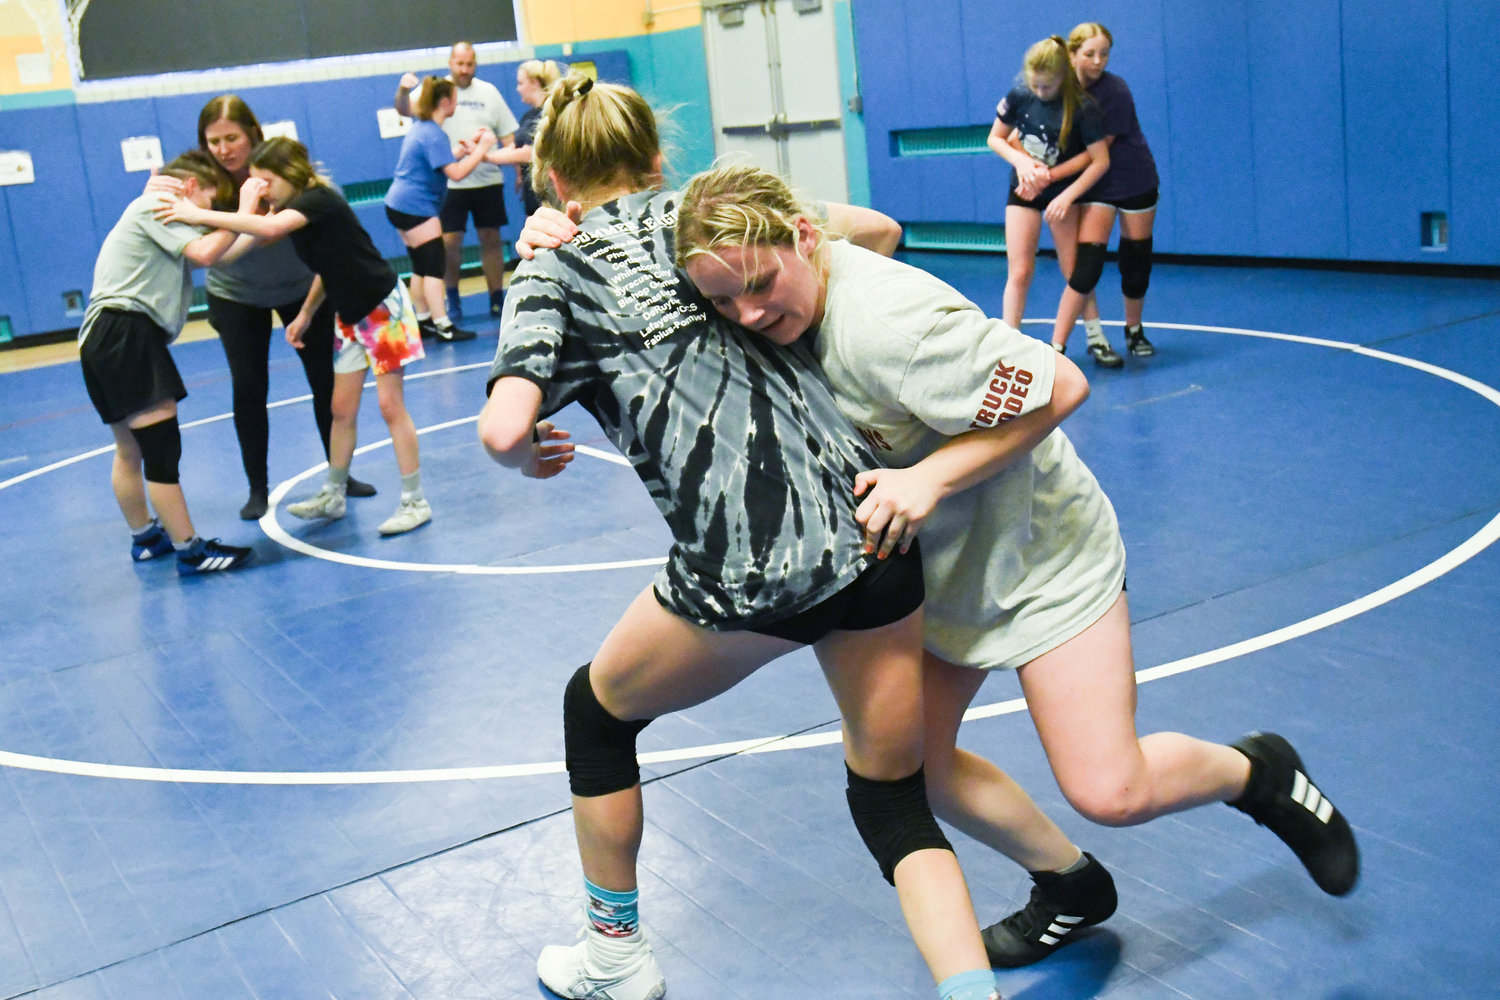 Camden wrestlers McKenzie Aldridge and Megan Trautner, front, practice with others on Monday at Camden Elementary School.